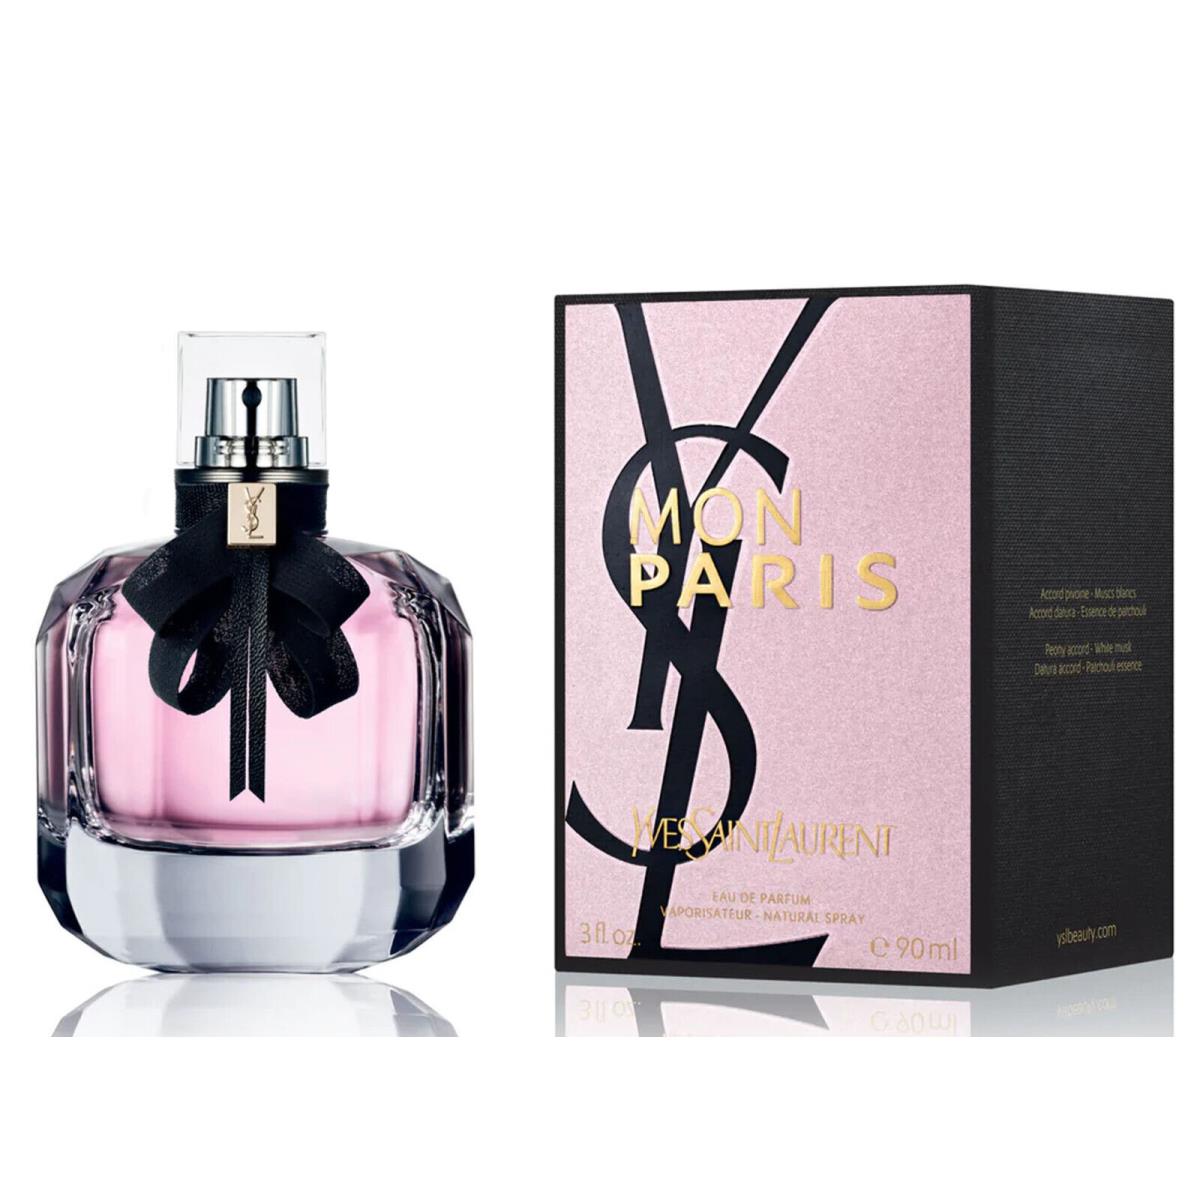 Mon Paris by Yves Saint Laurent Ysl 3 oz / 100 ml Edp Perfume For Women